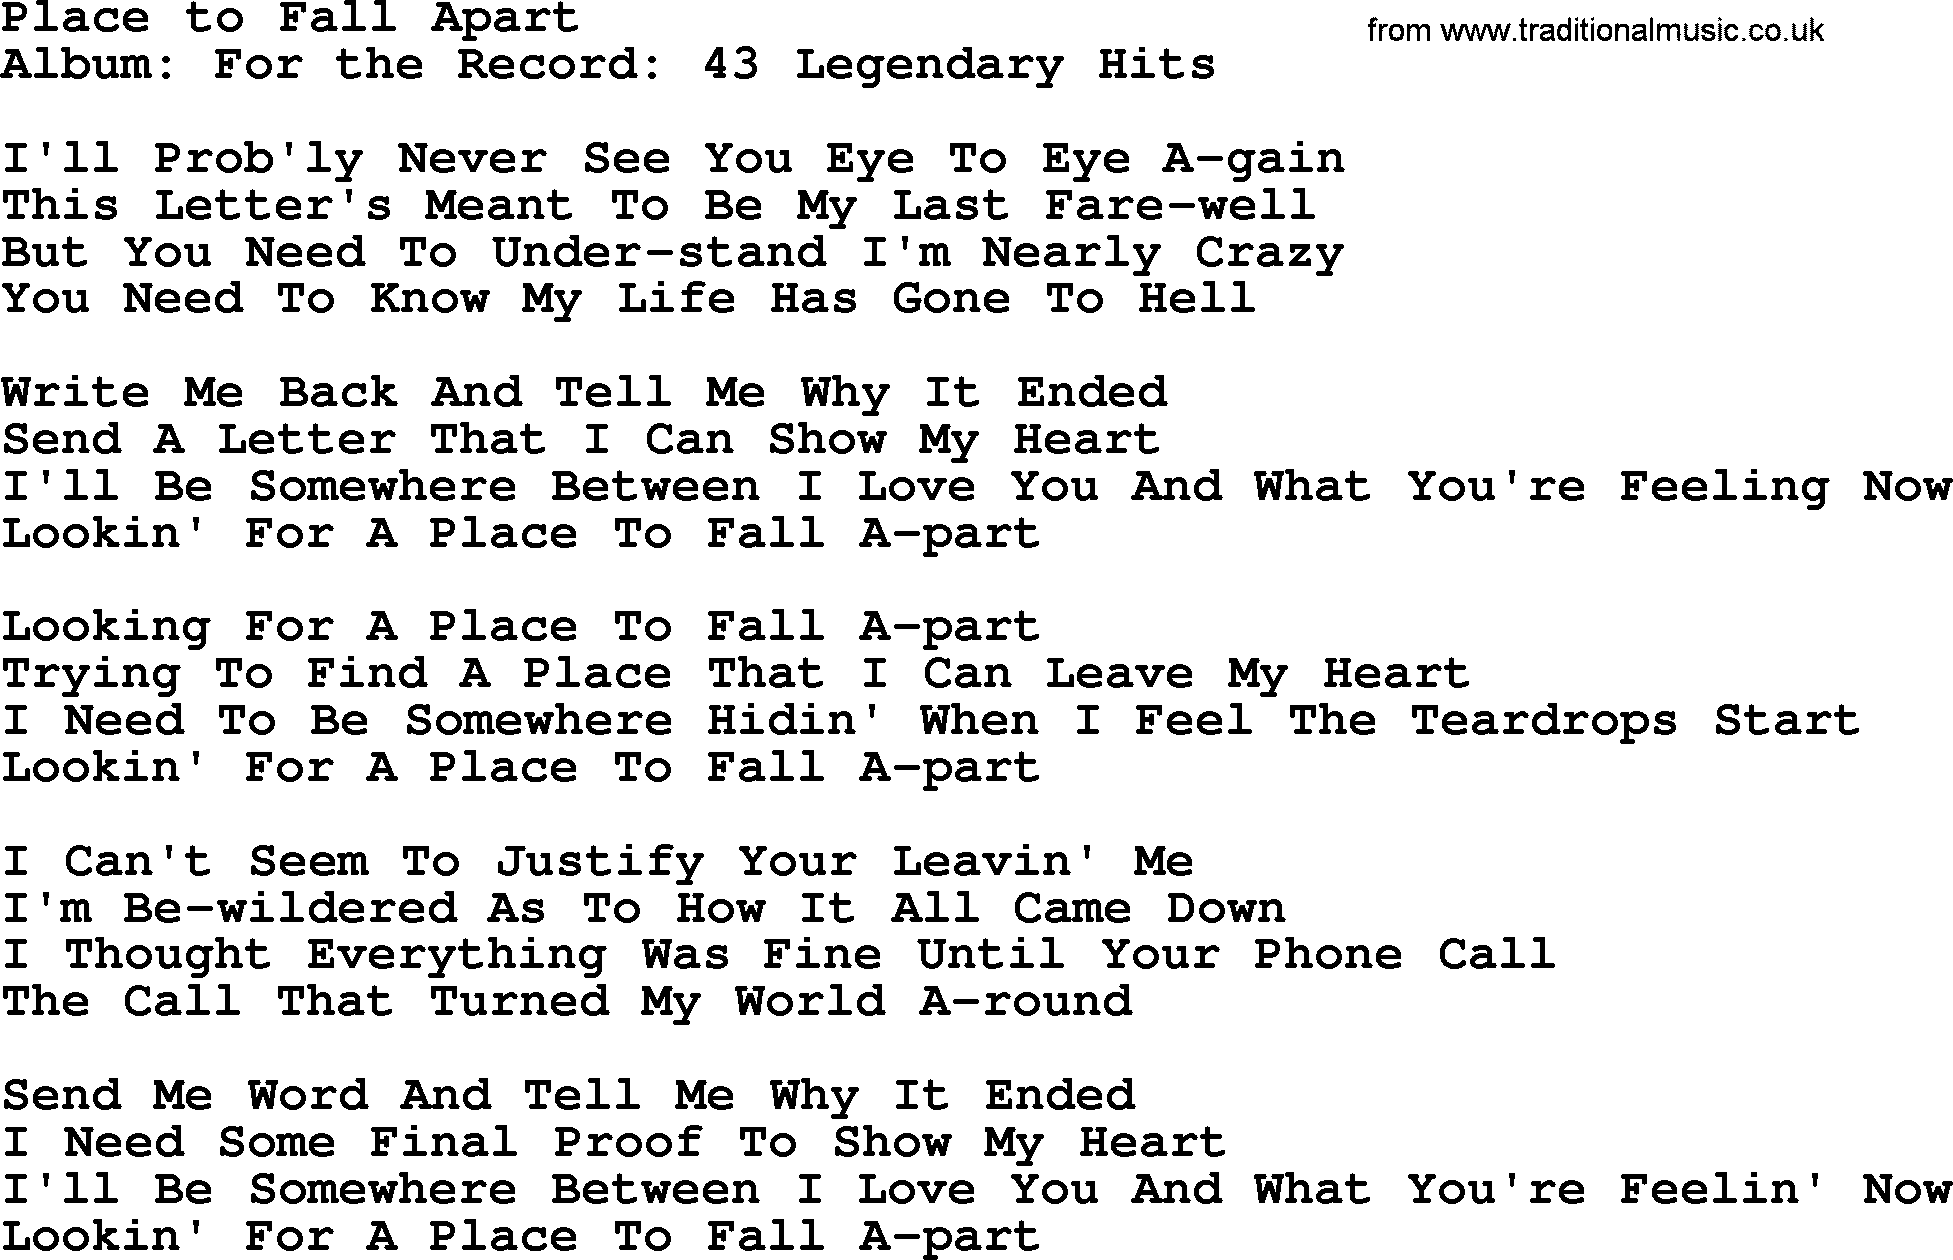 Merle Haggard song: Place To Fall Apart, lyrics.